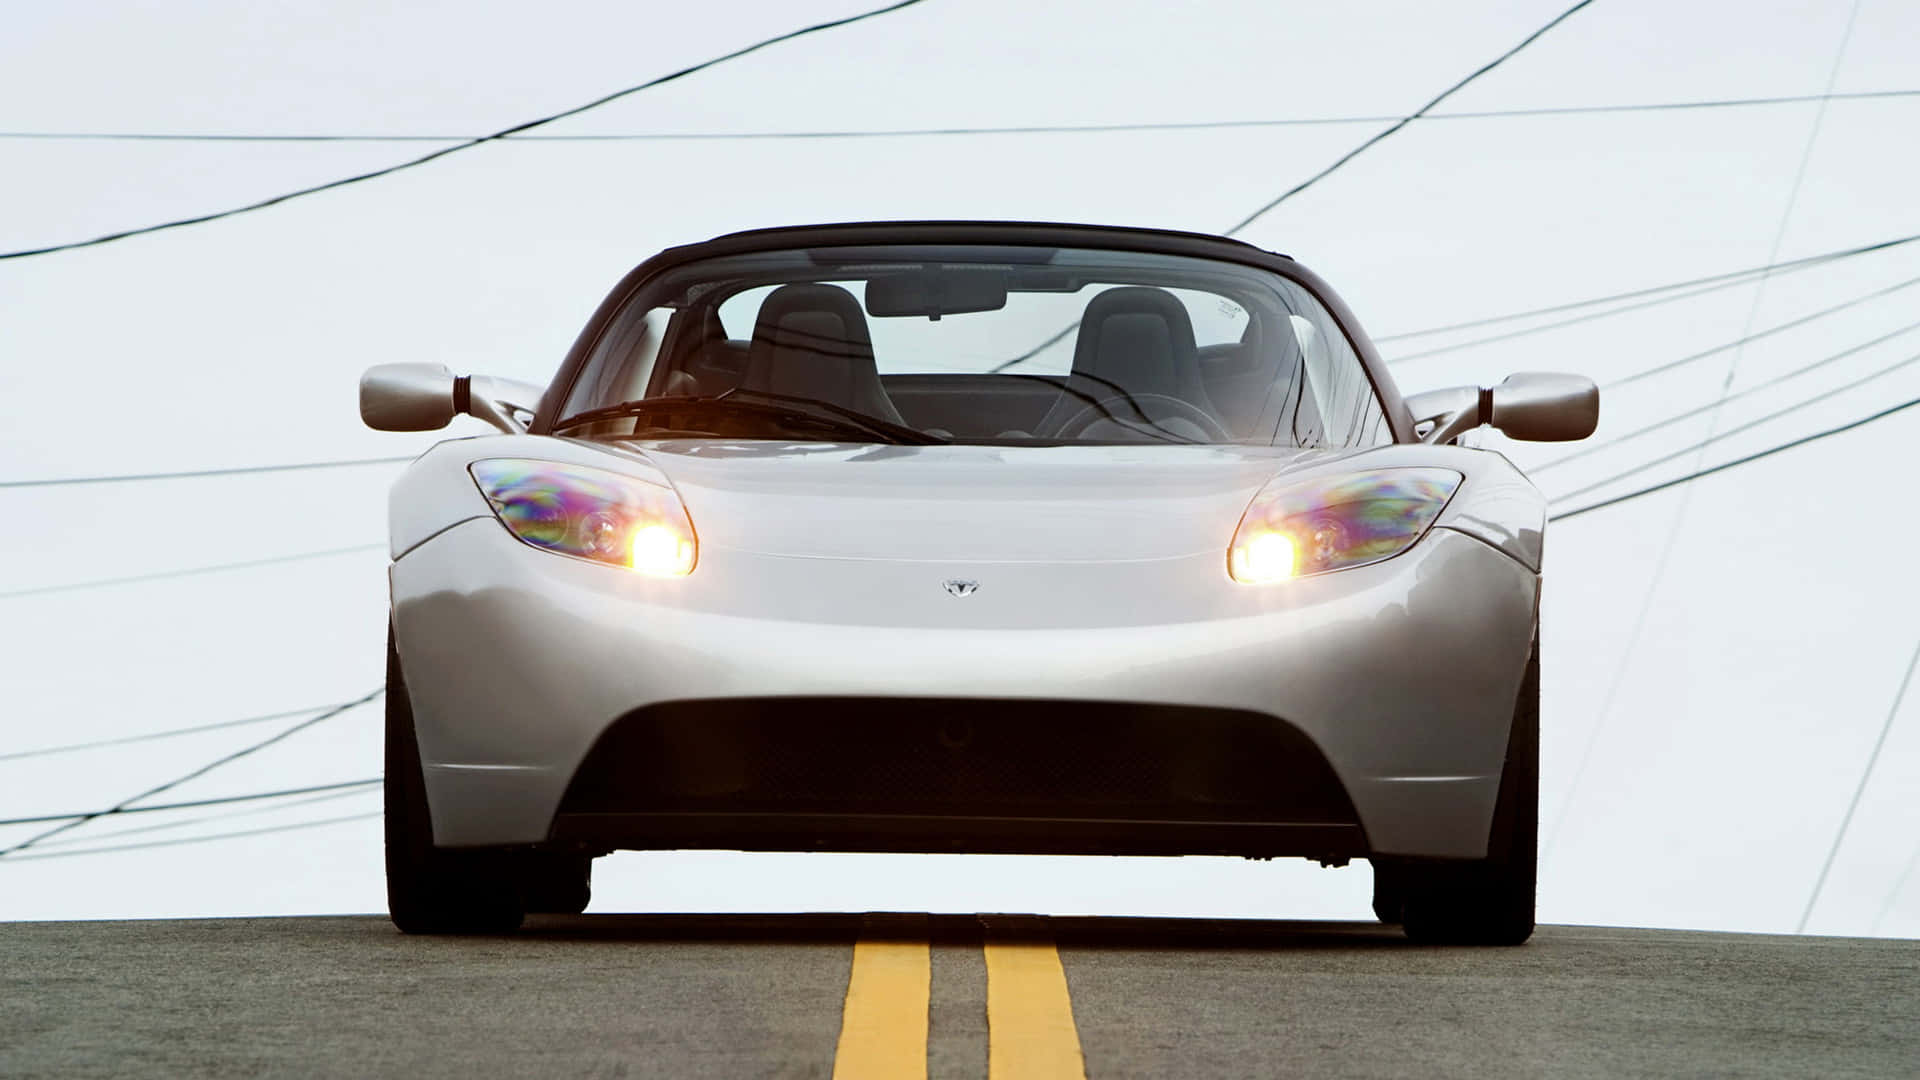 Exhilarating Speed - The Tesla Roadster Background